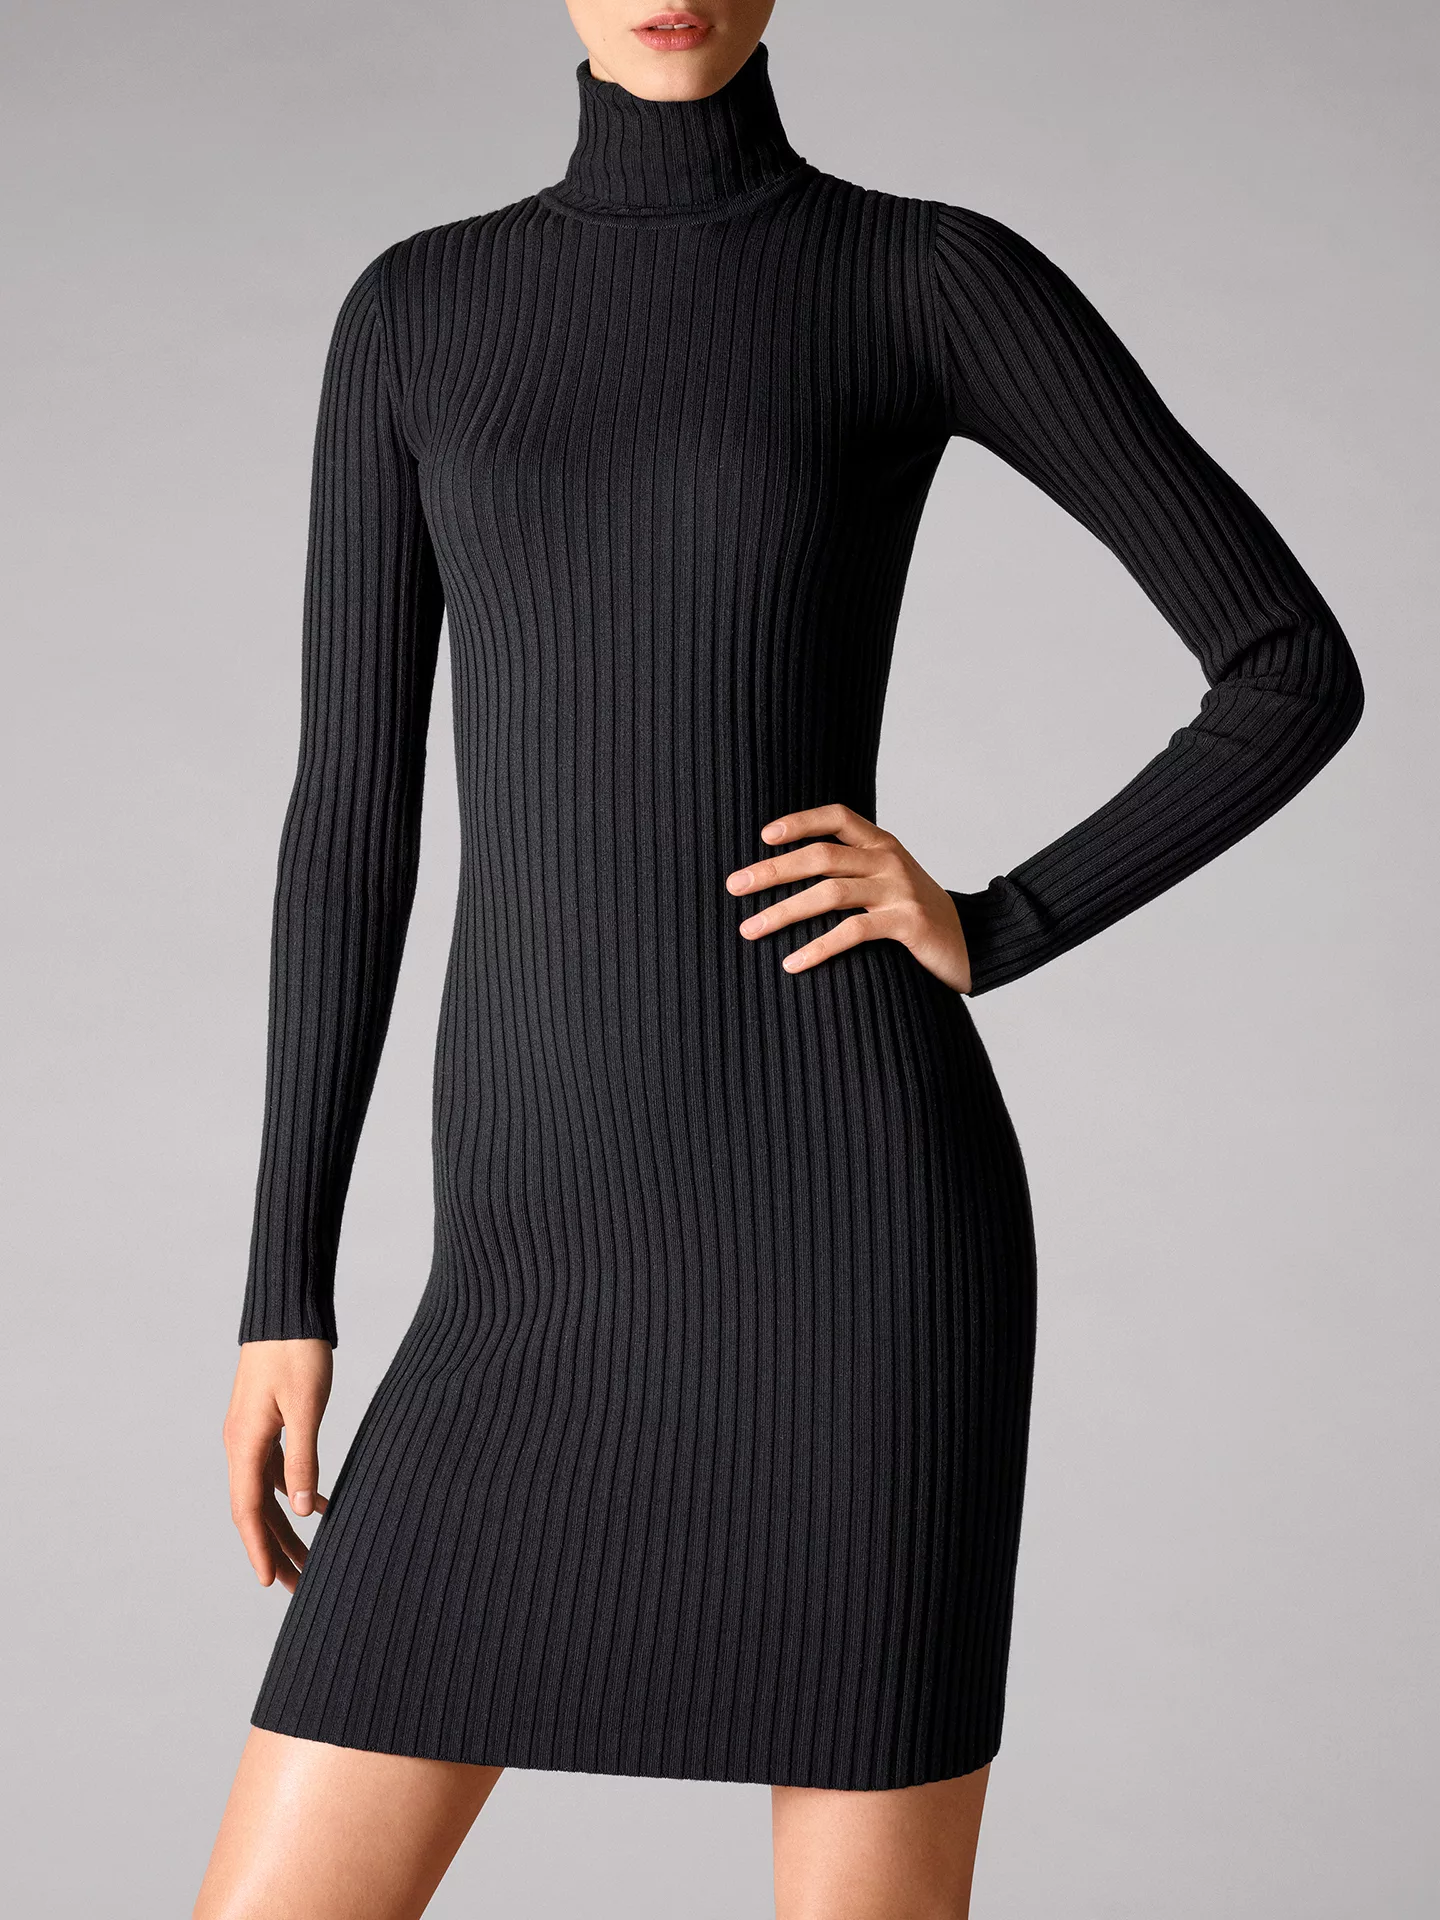 Wolford - Merino Rib Dress, Frau, black, Größe: L günstig online kaufen